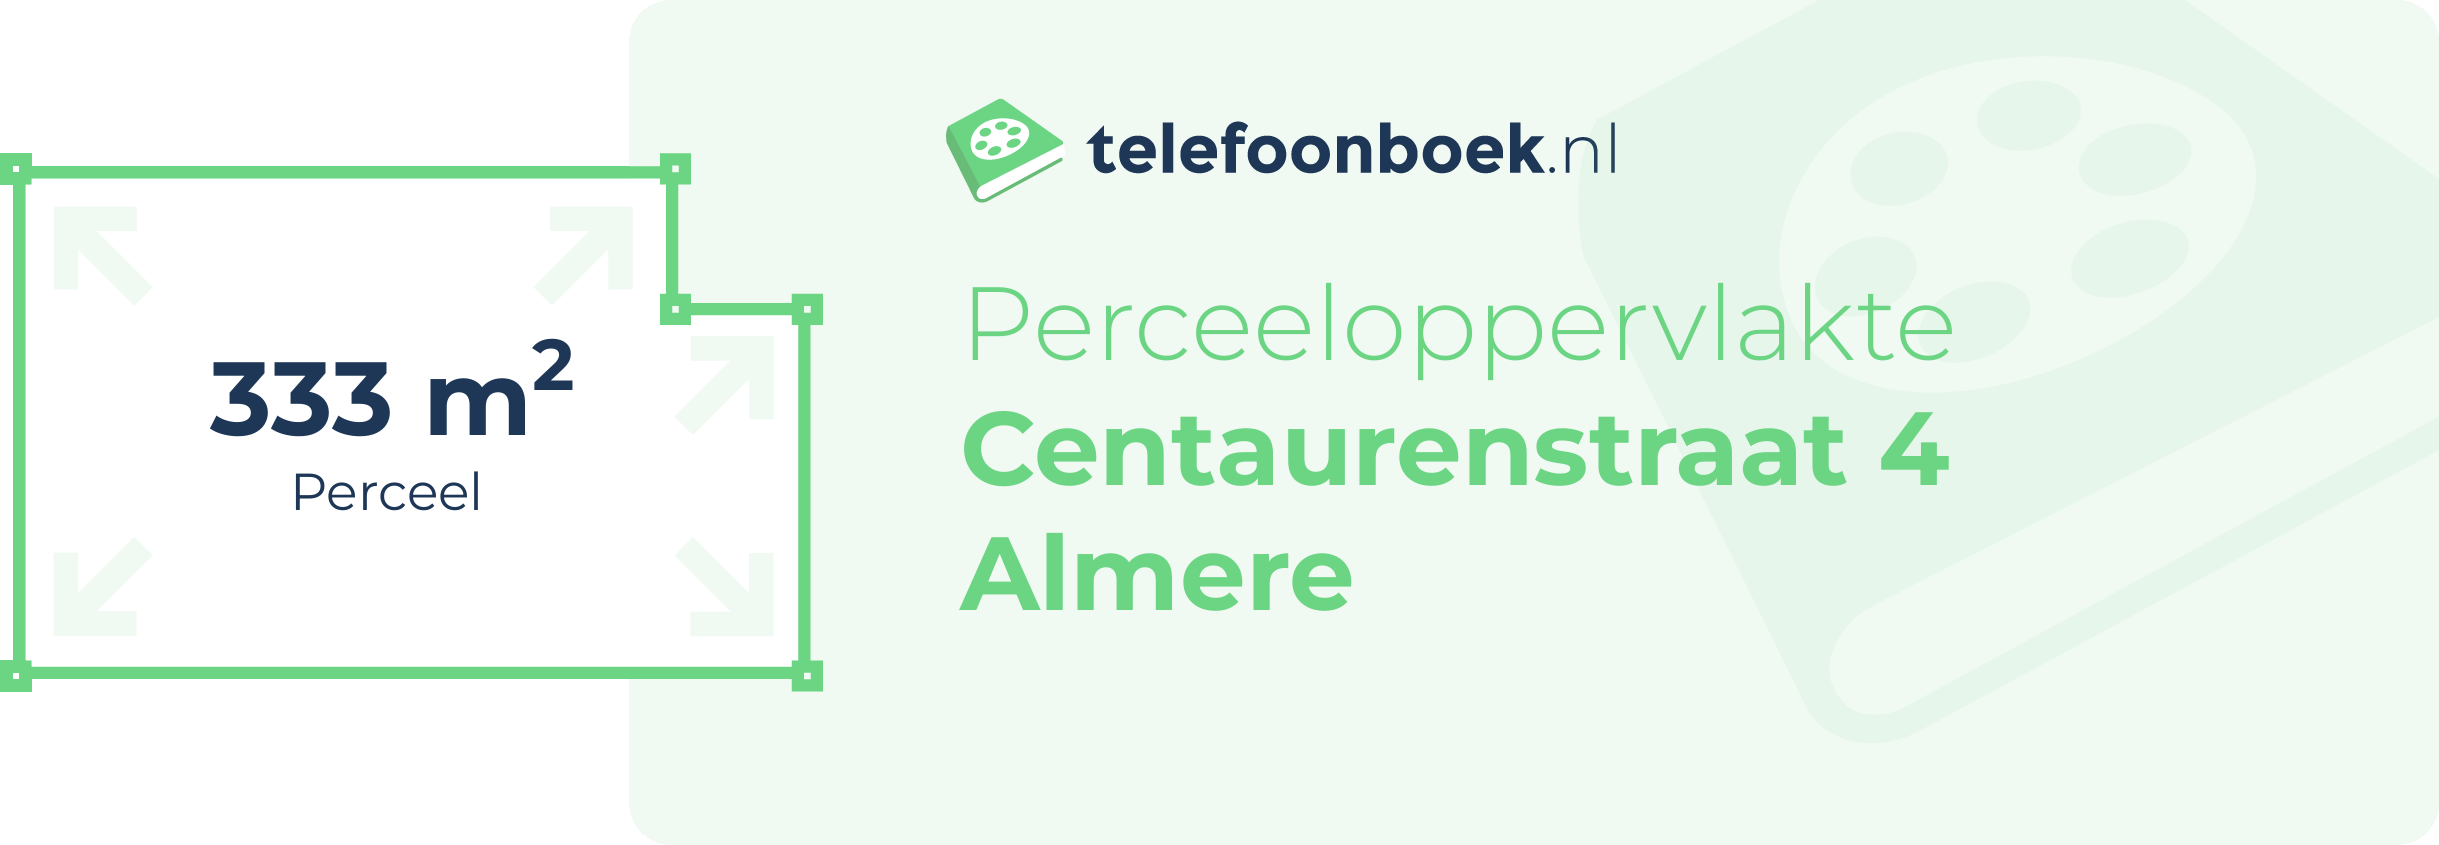 Perceeloppervlakte Centaurenstraat 4 Almere